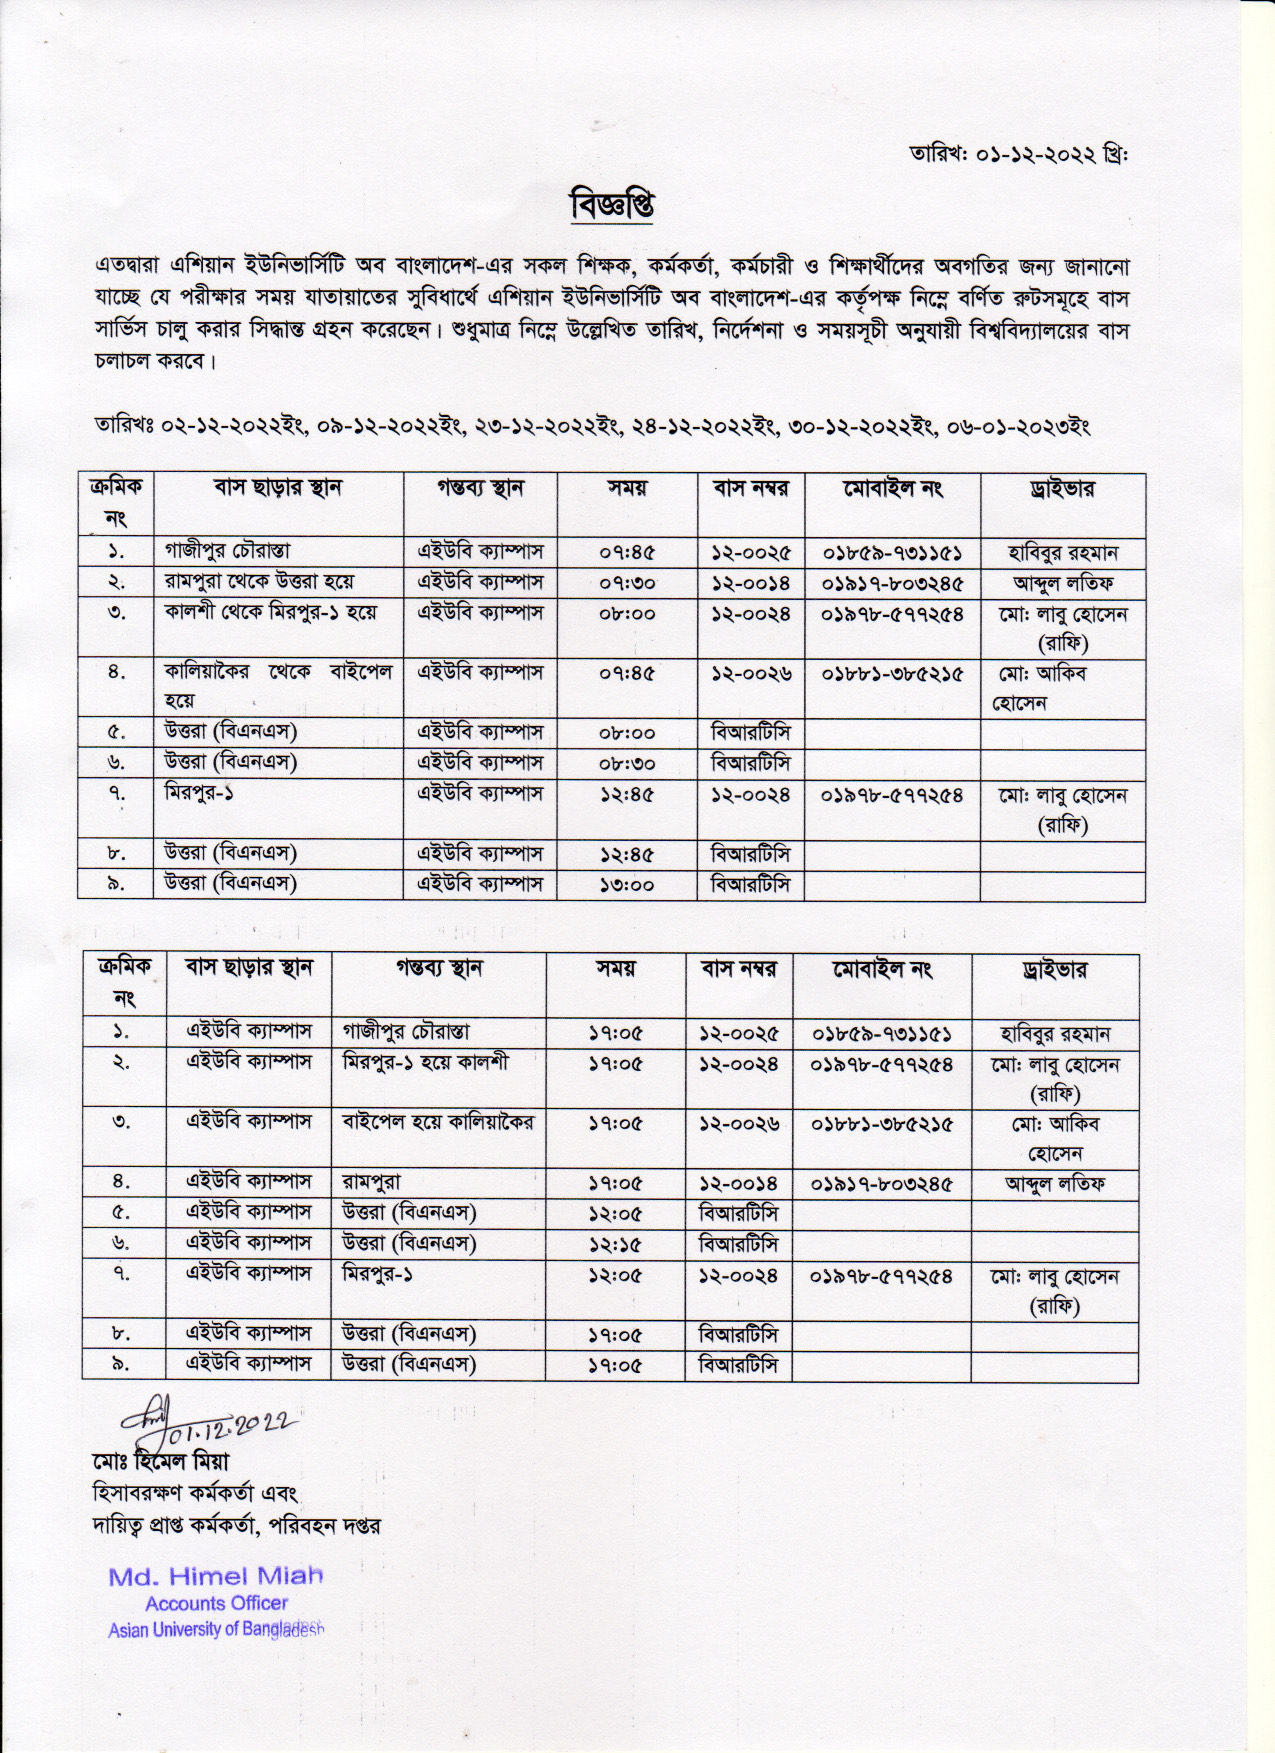 Bus Schedule for Examination